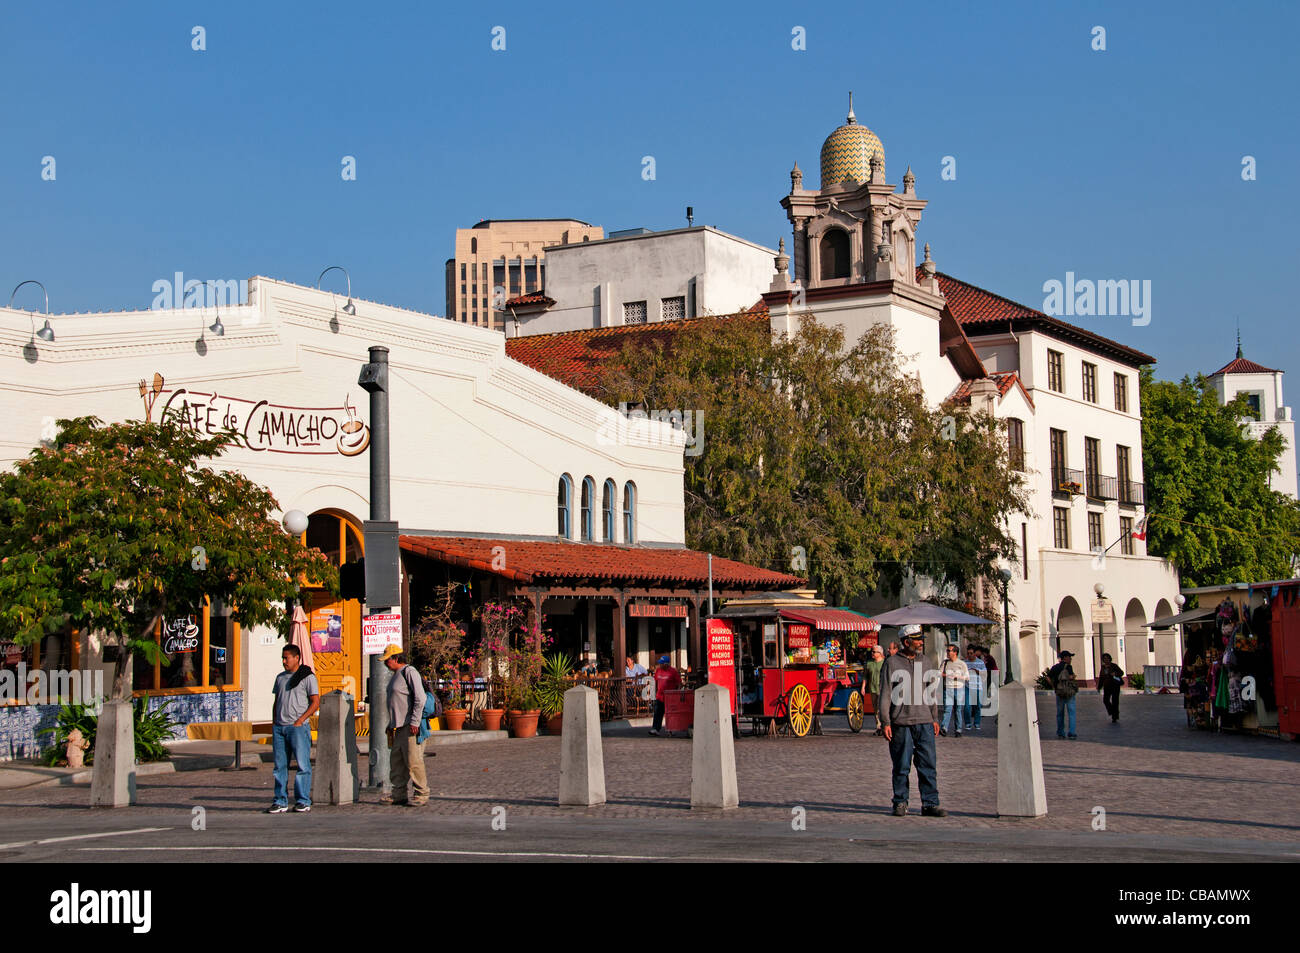 El Pueblo Downtown Spanish Spain Los Angeles California United States Stock Photo